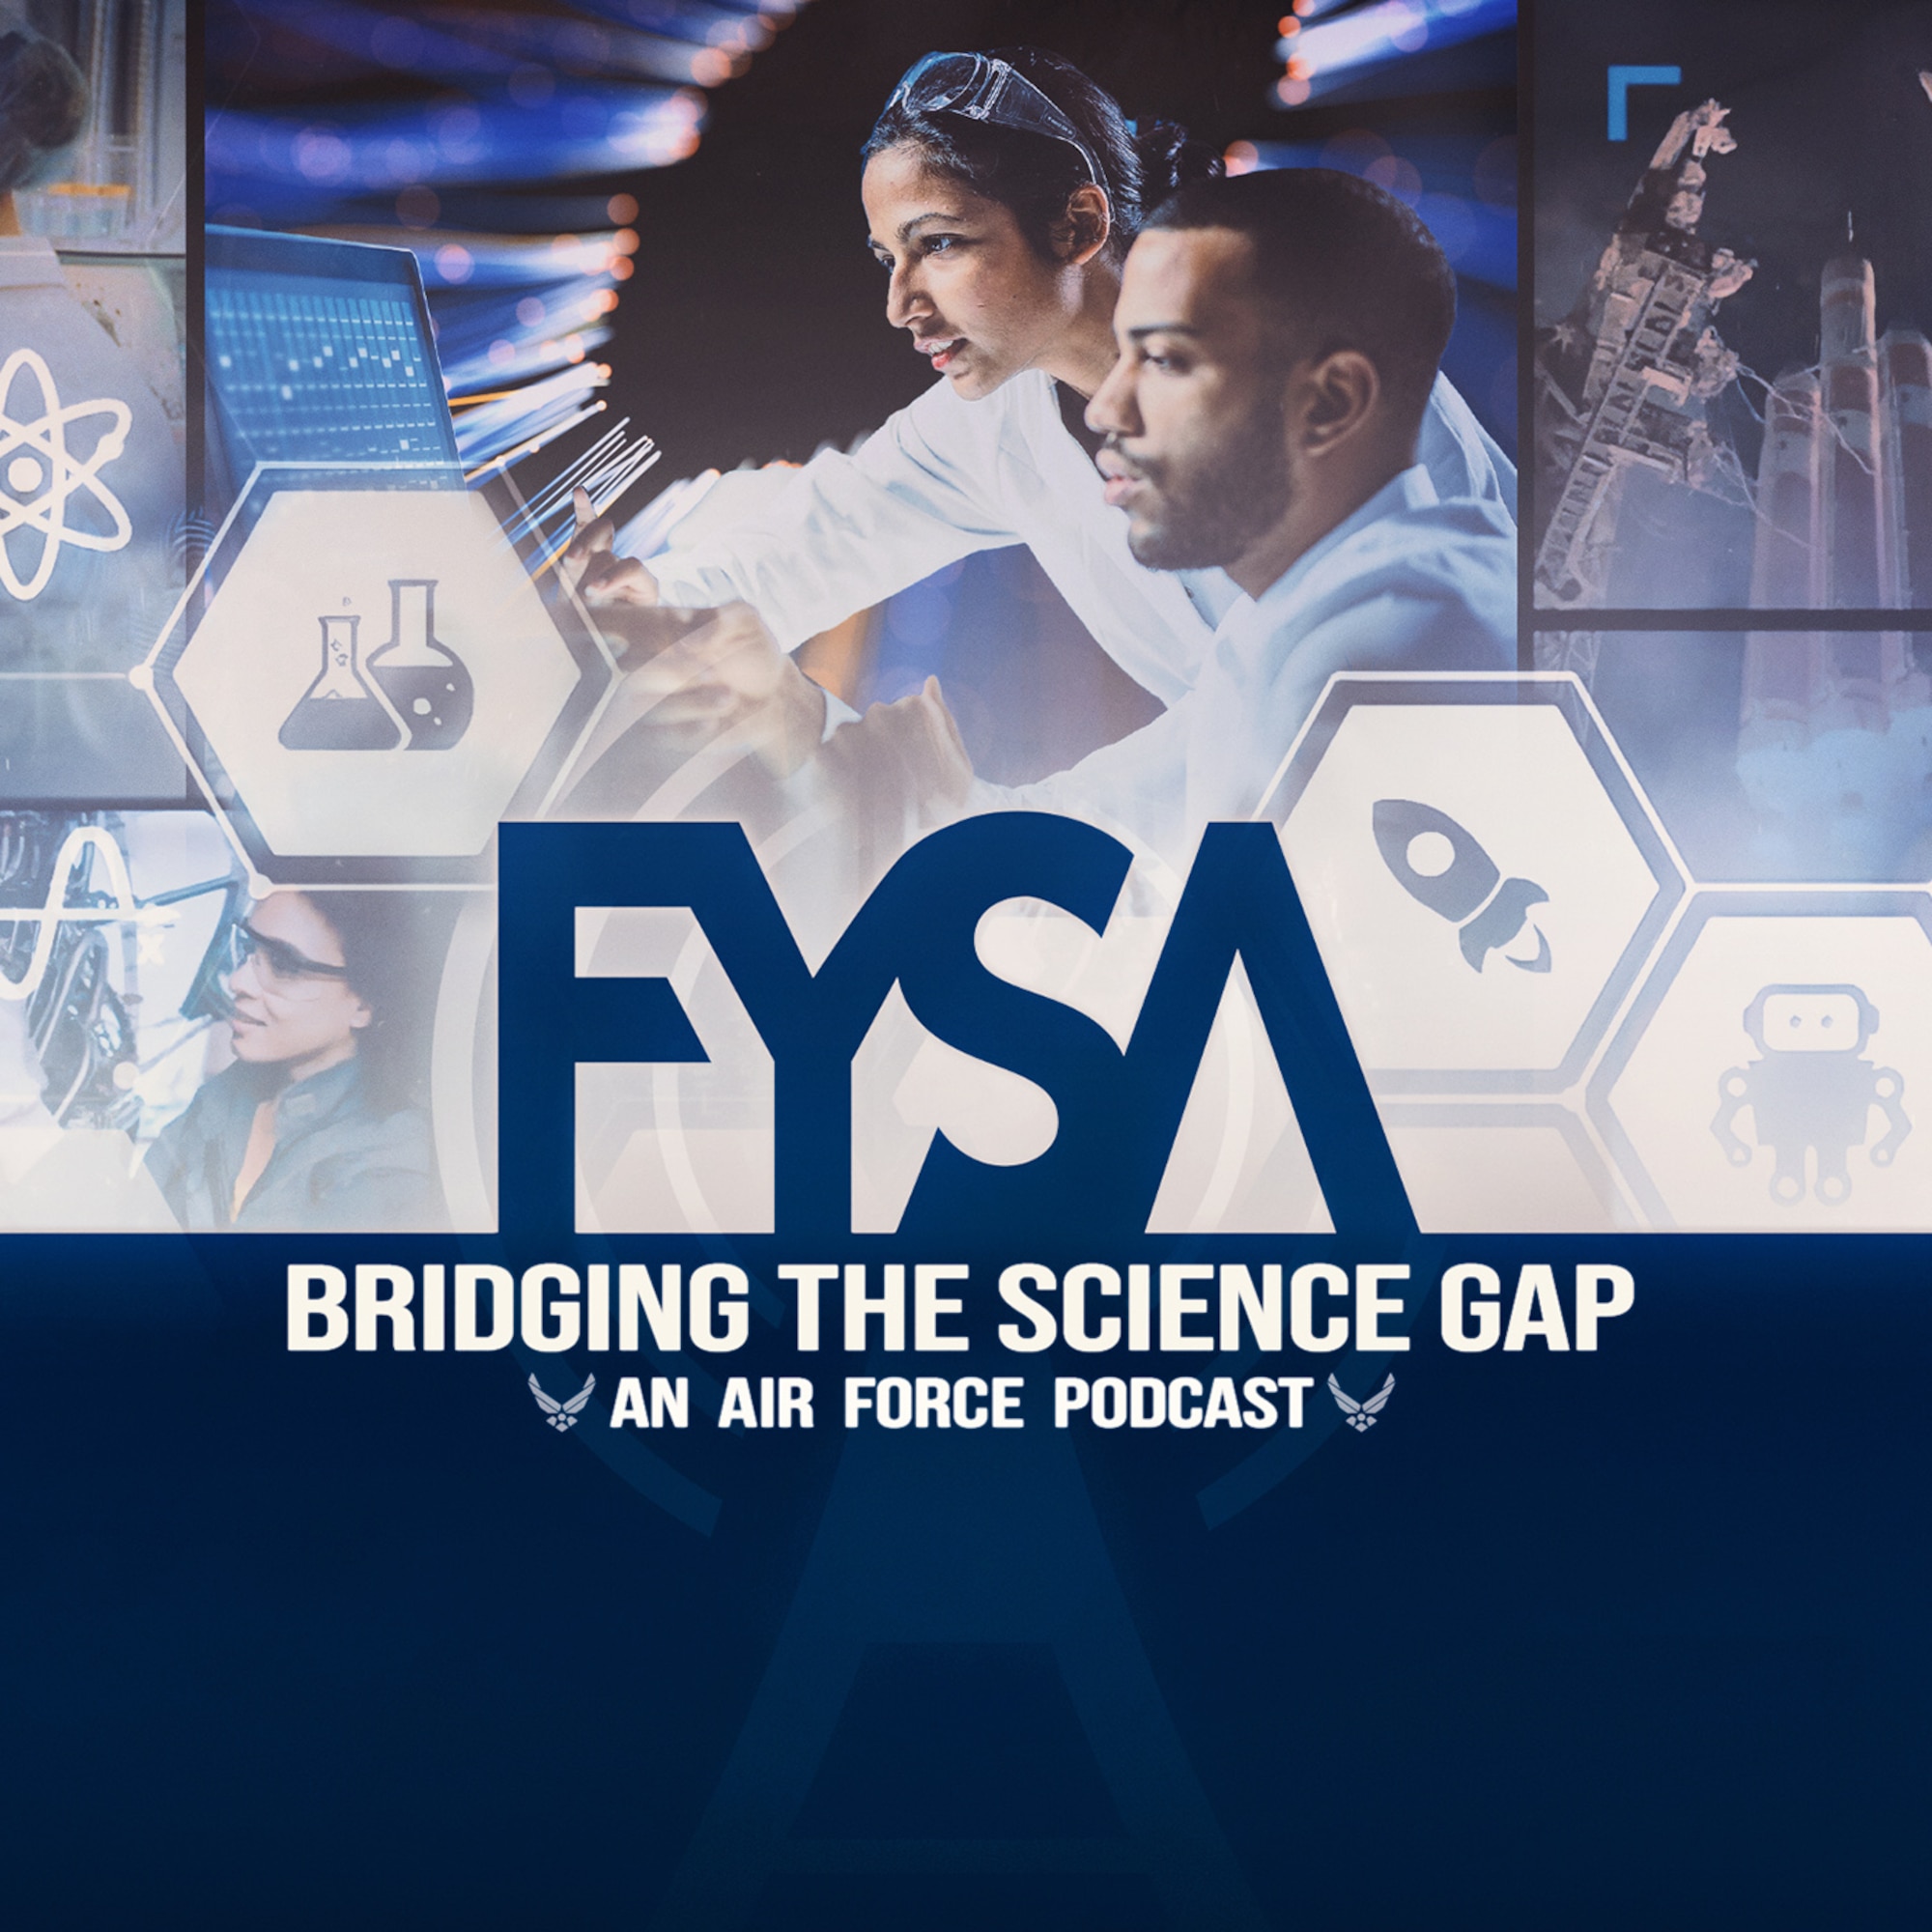 FYSA : Bridging the Science Gap